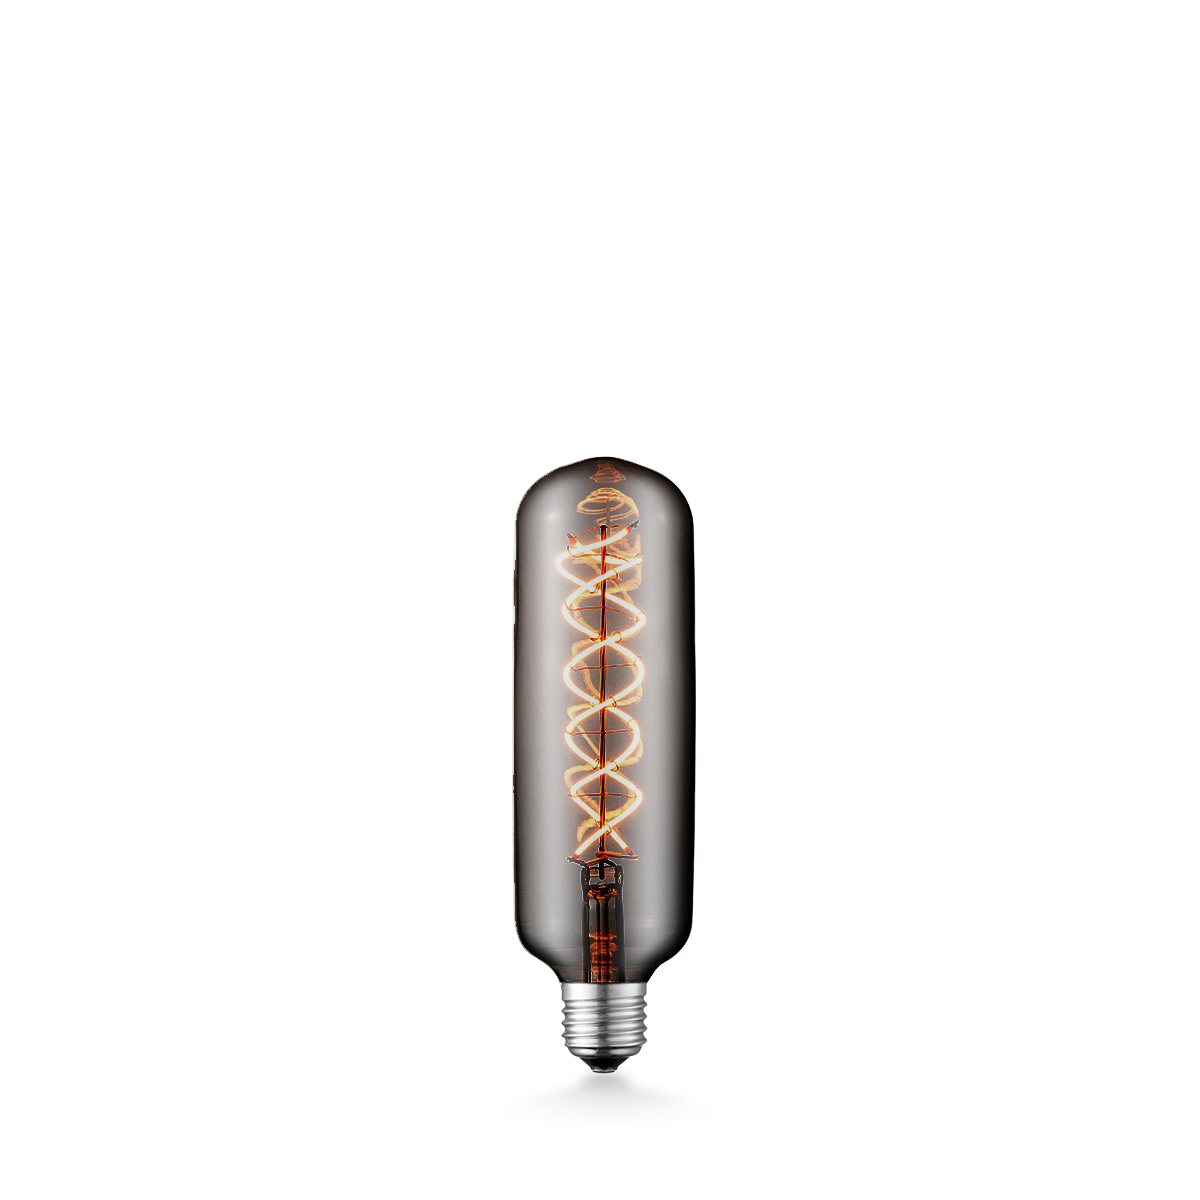 Tangla lighting - TLB-8027-06TM - LED Light Bulb Double Spiral filament - special 4W titanium - medium - dimmable - E27